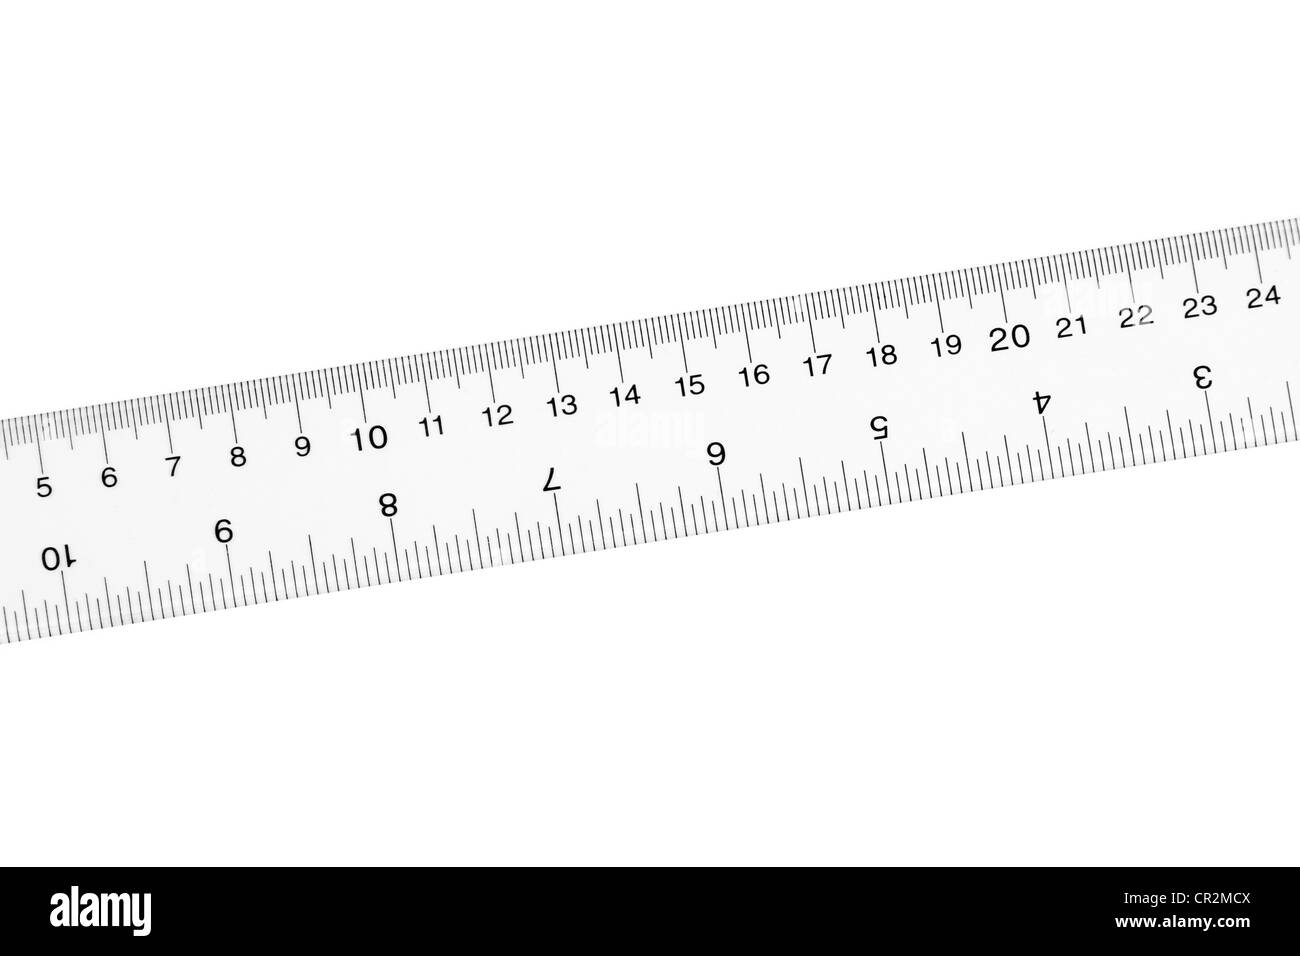 https://c8.alamy.com/comp/CR2MCX/plastic-transparent-ruler-with-white-background-CR2MCX.jpg